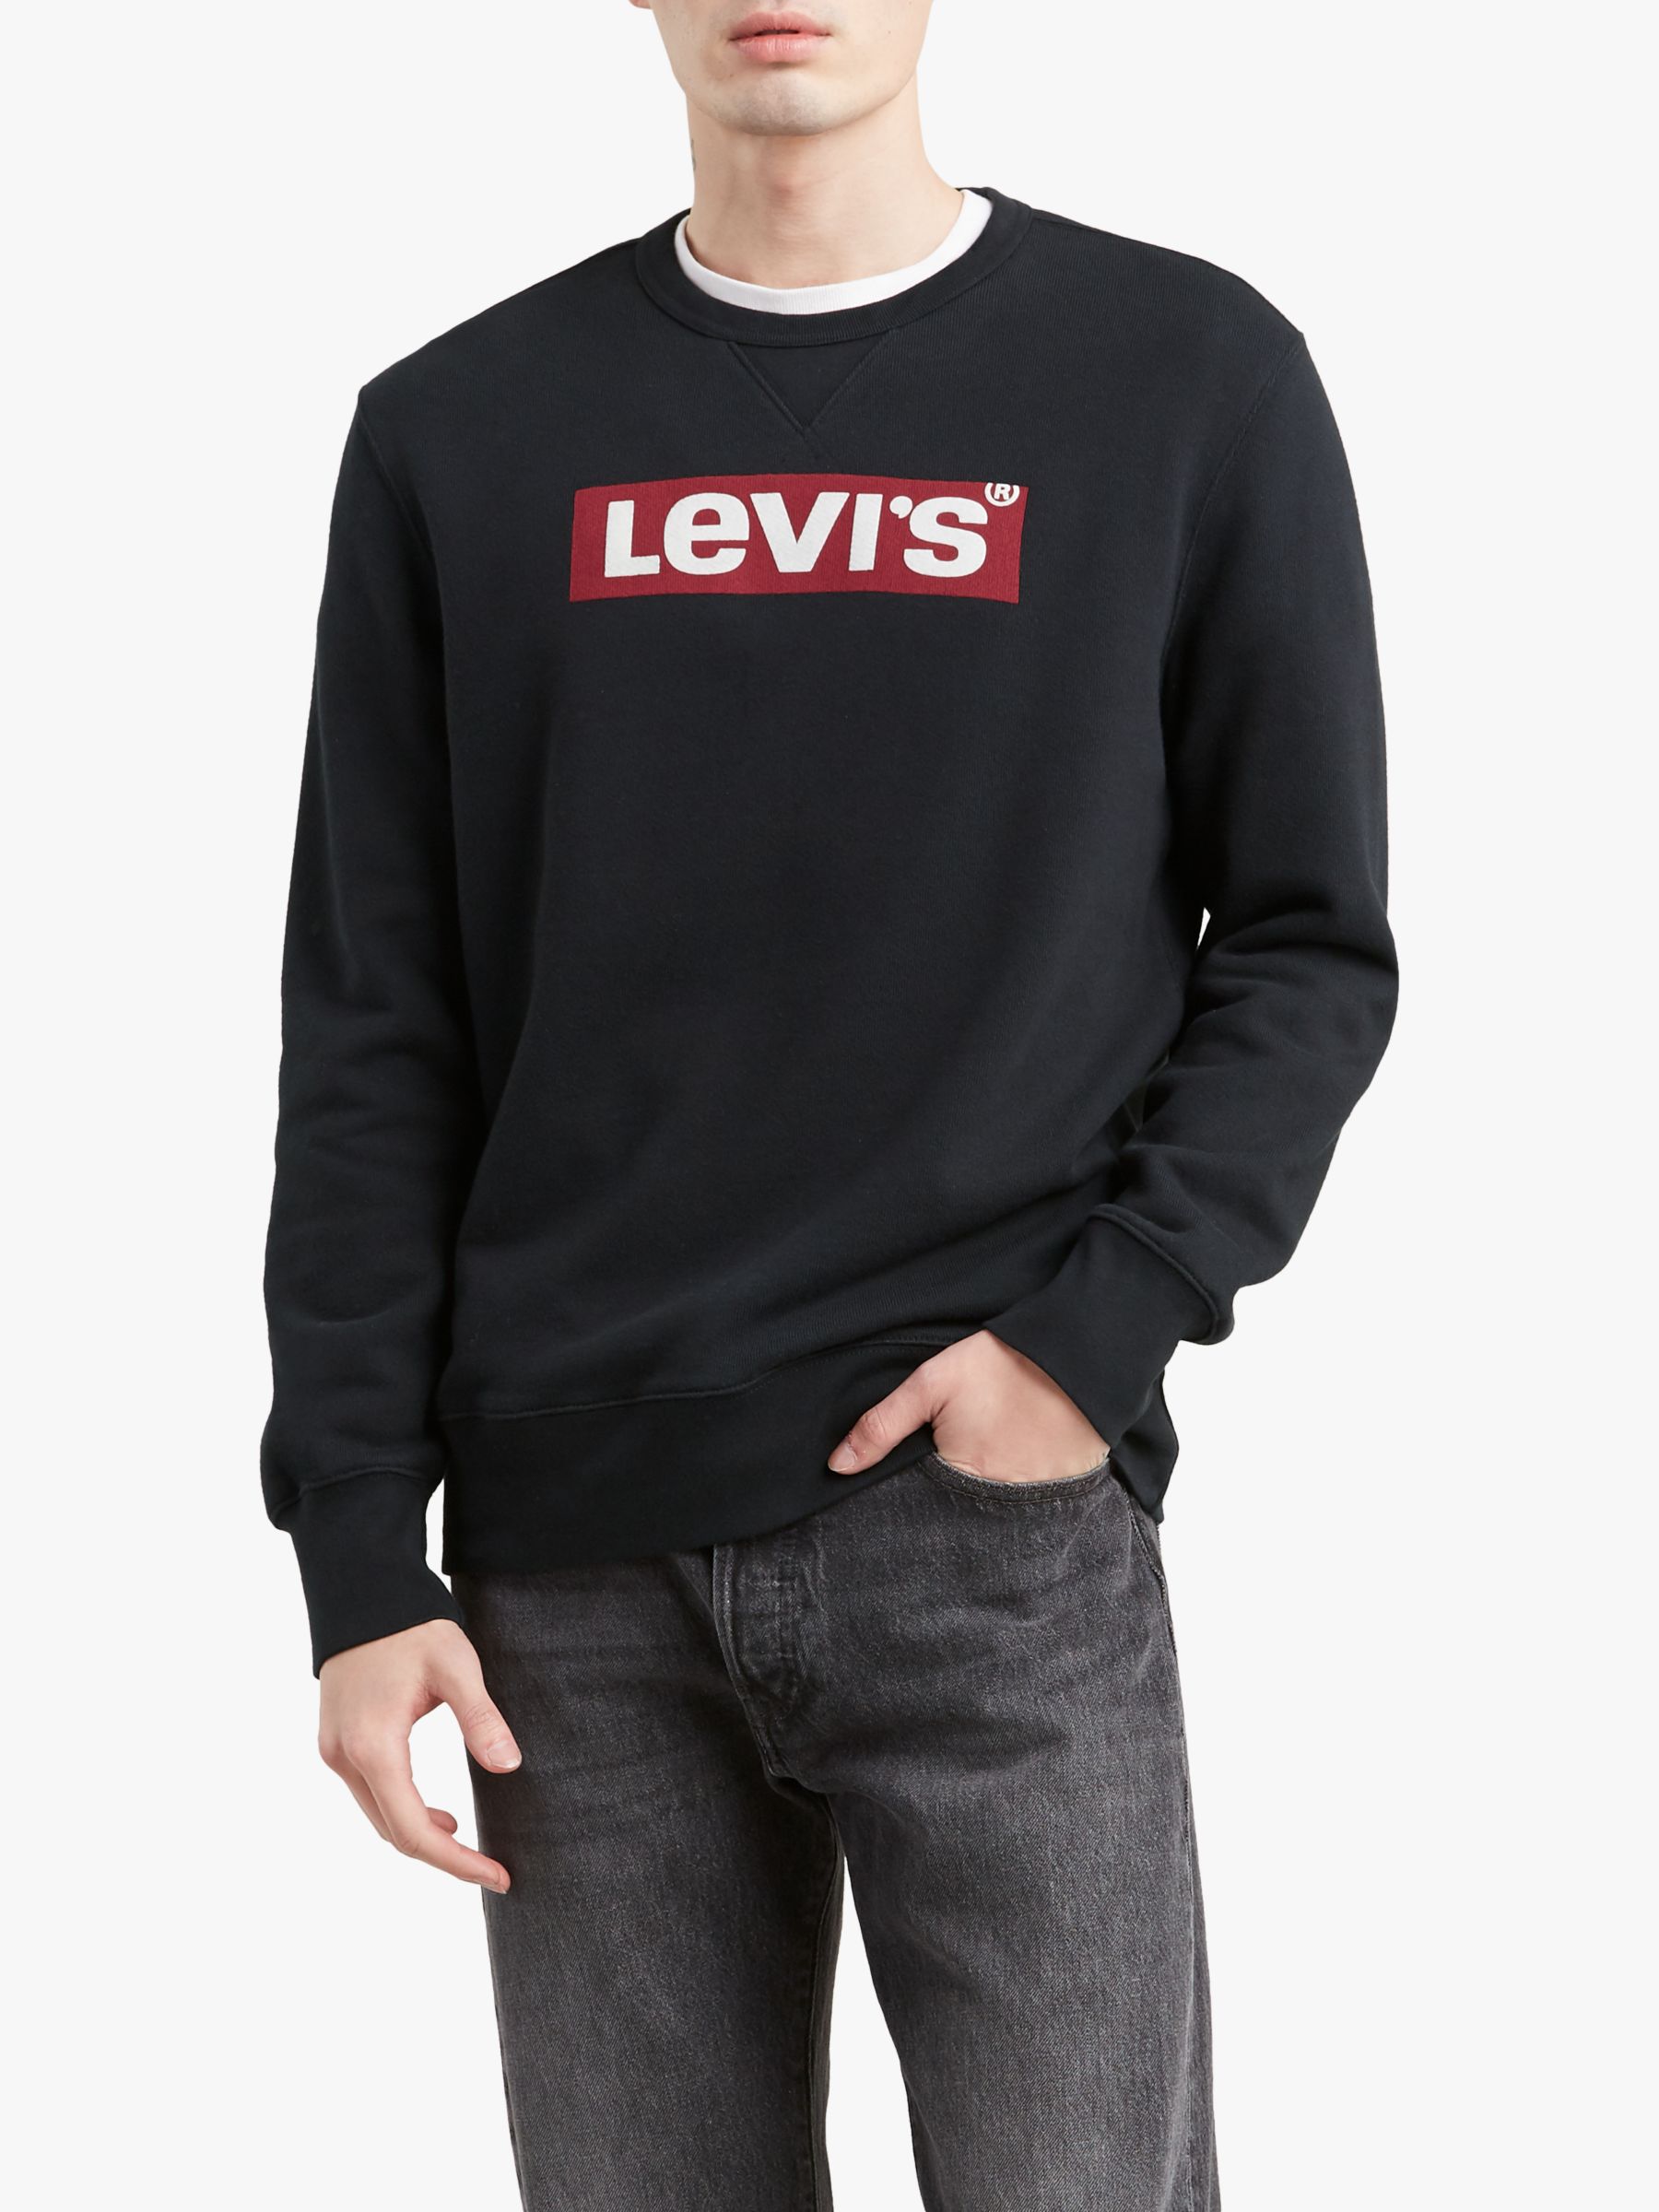 levi's sweatshirt black 